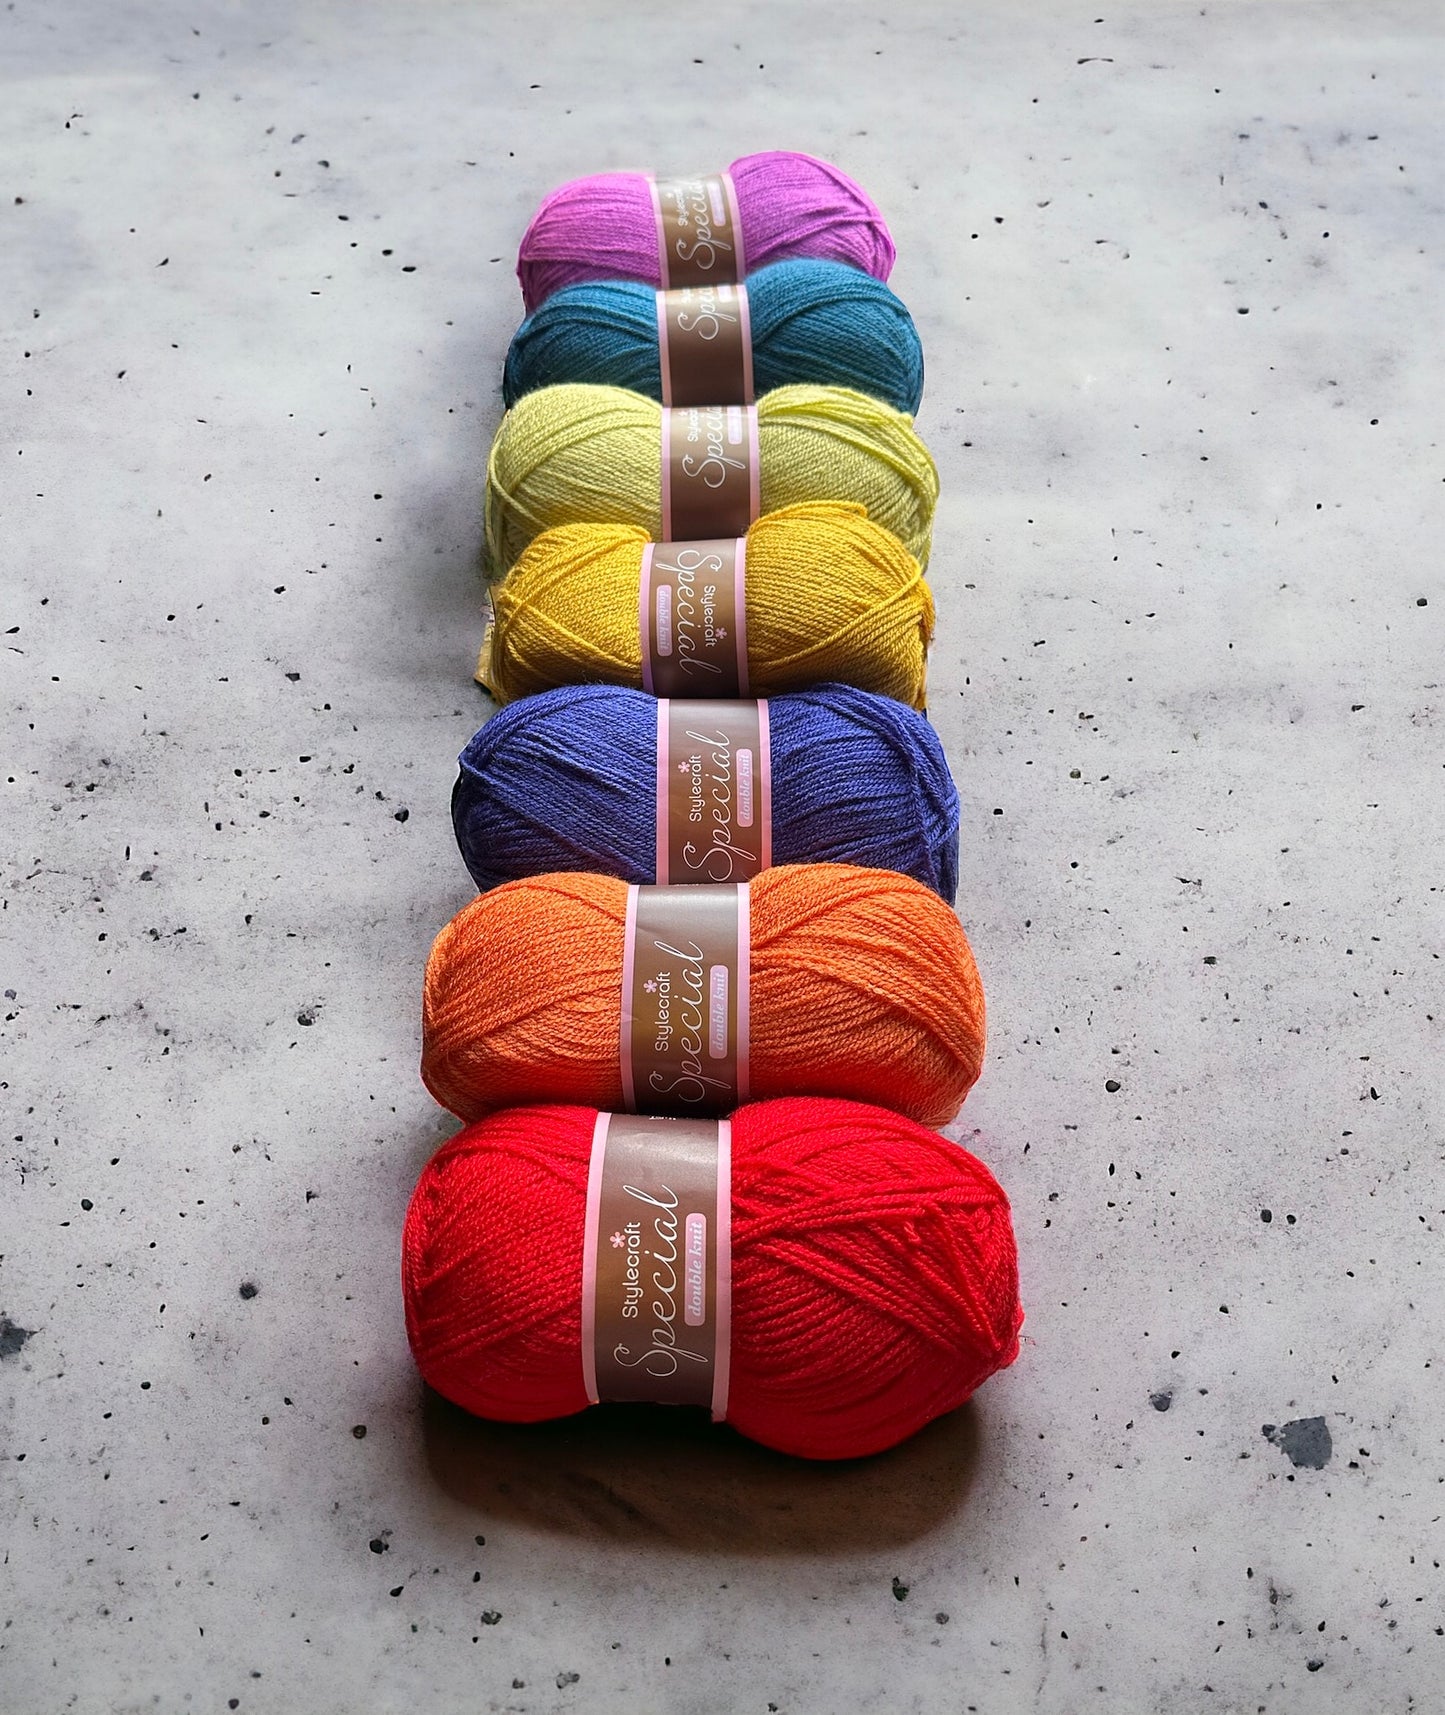 Gemstone Yarn Pack - Stylecraft Special dk